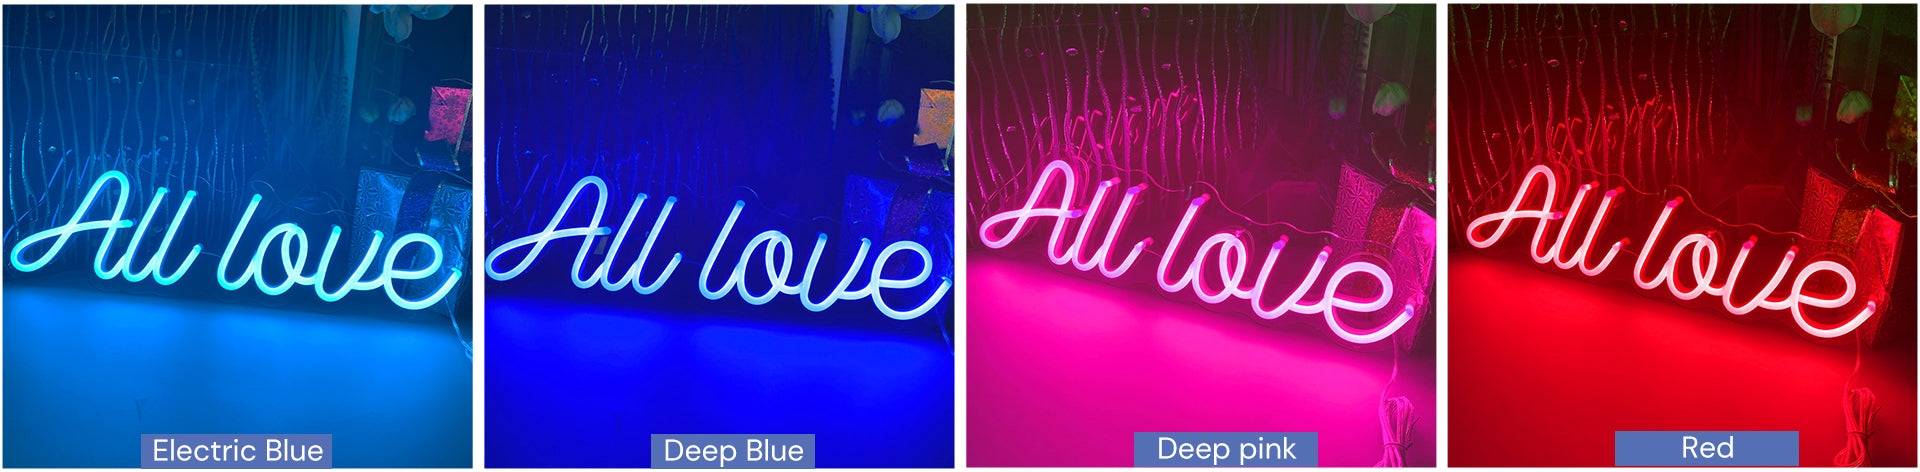 all love led neon sign UK